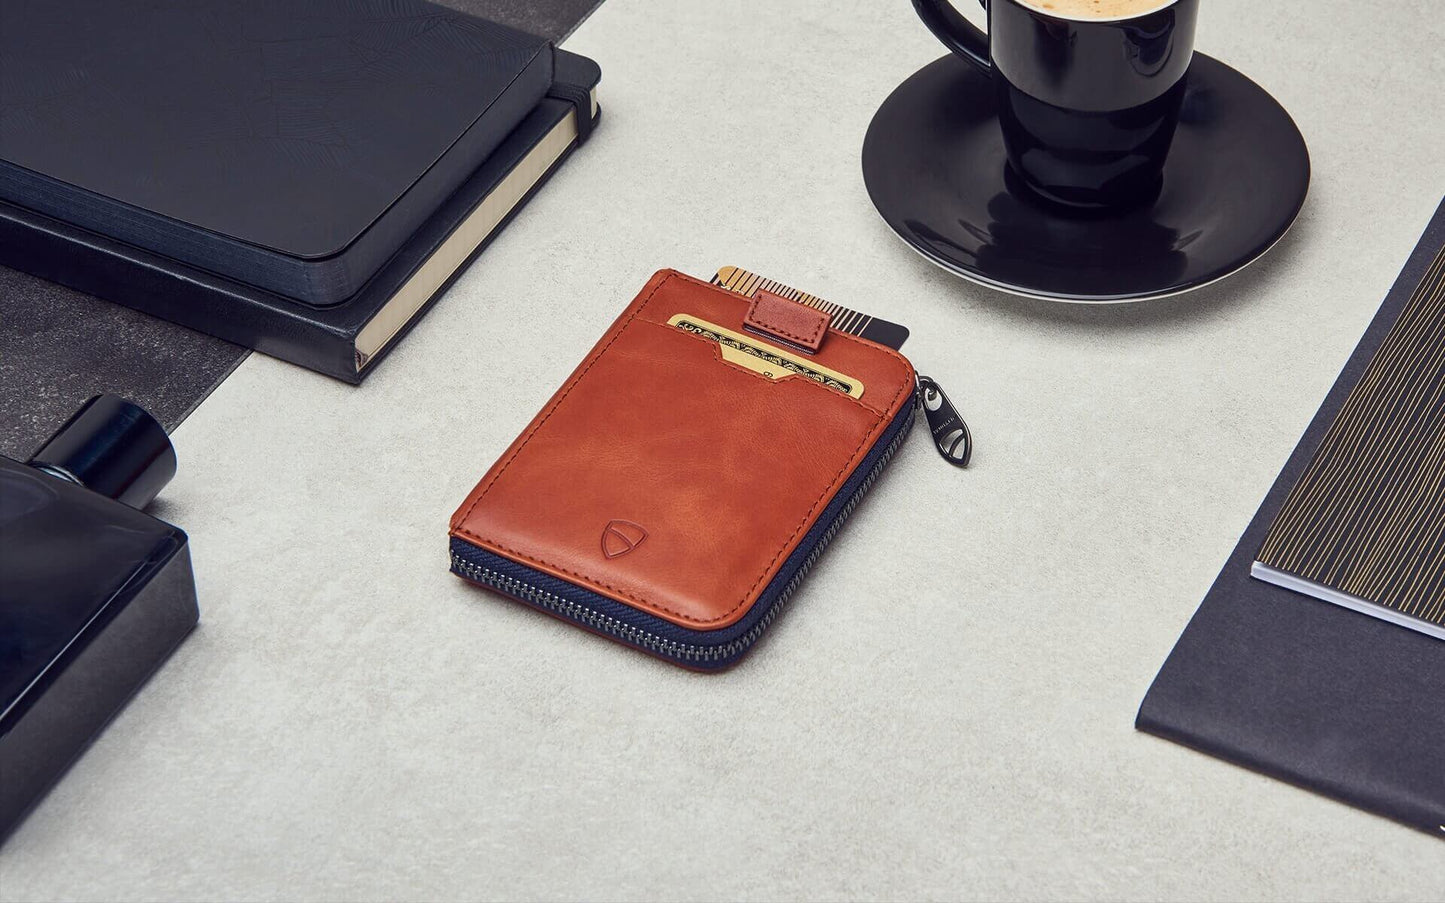 Sleek wallet design